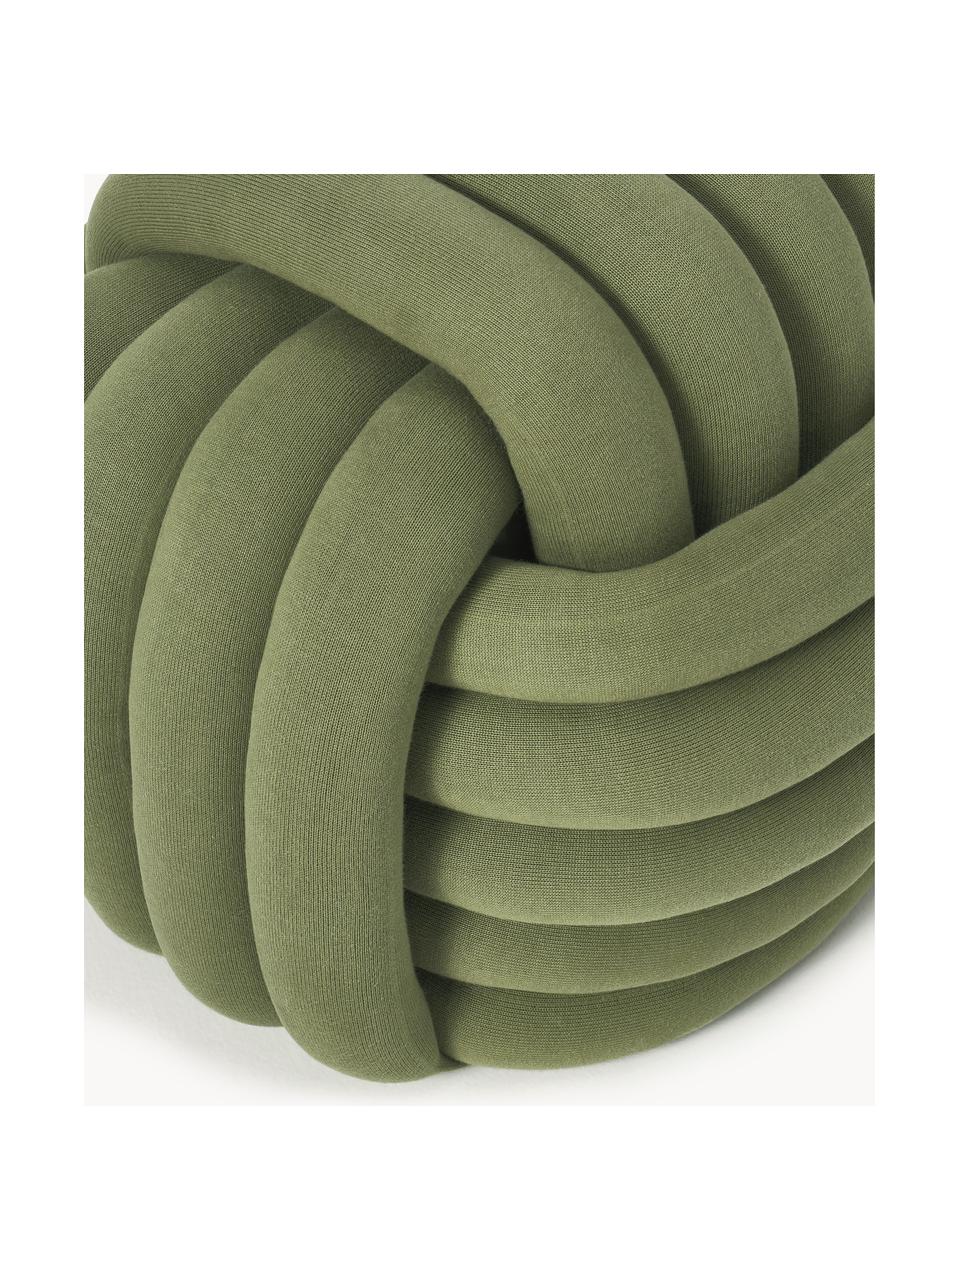 Pouf annodato Twist, Rivestimento: 100% cotone, Verde oliva, Larg. 54 x Alt. 45 cm